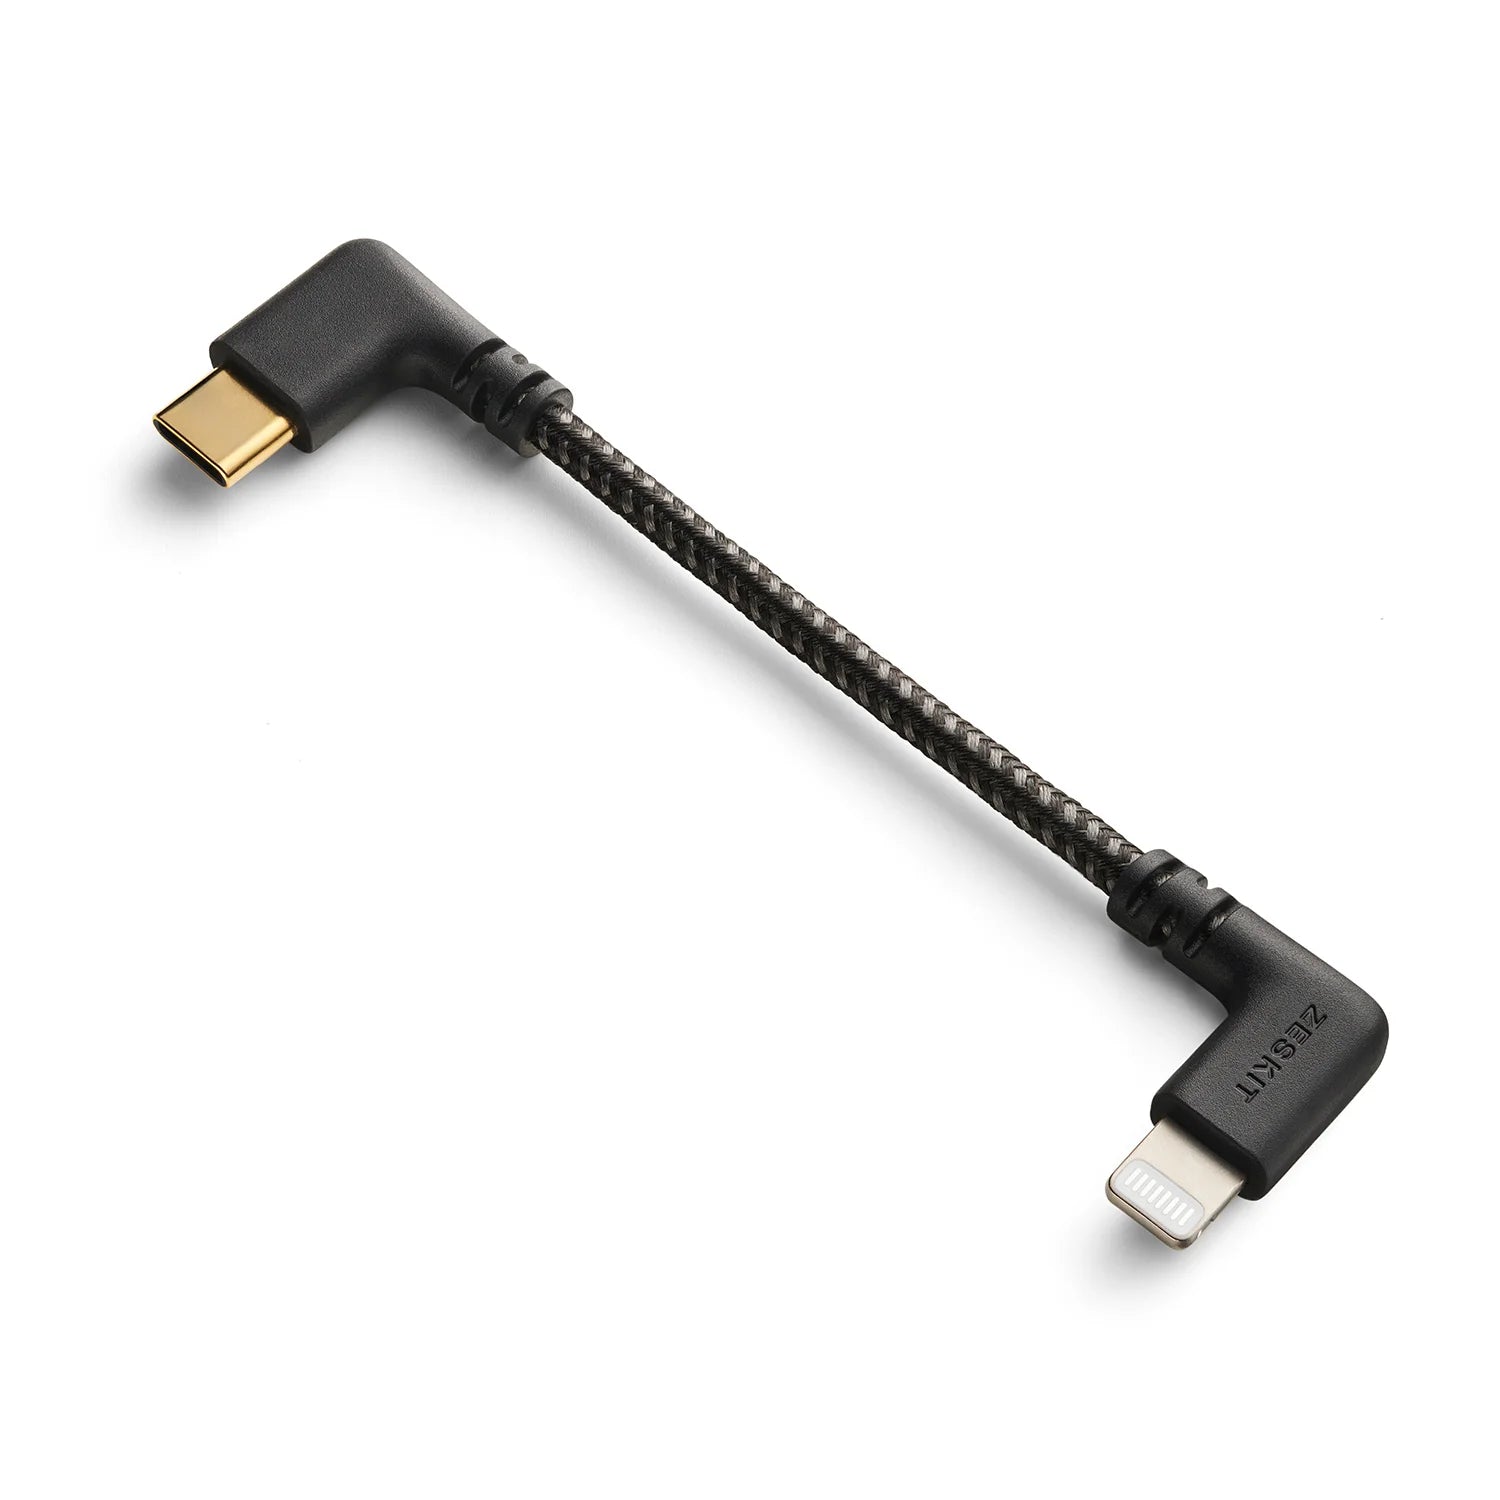 Zeskit Lightning to USB - C MFi 認證 90度傳輸線 - Fever Electrics 電器熱網購平台